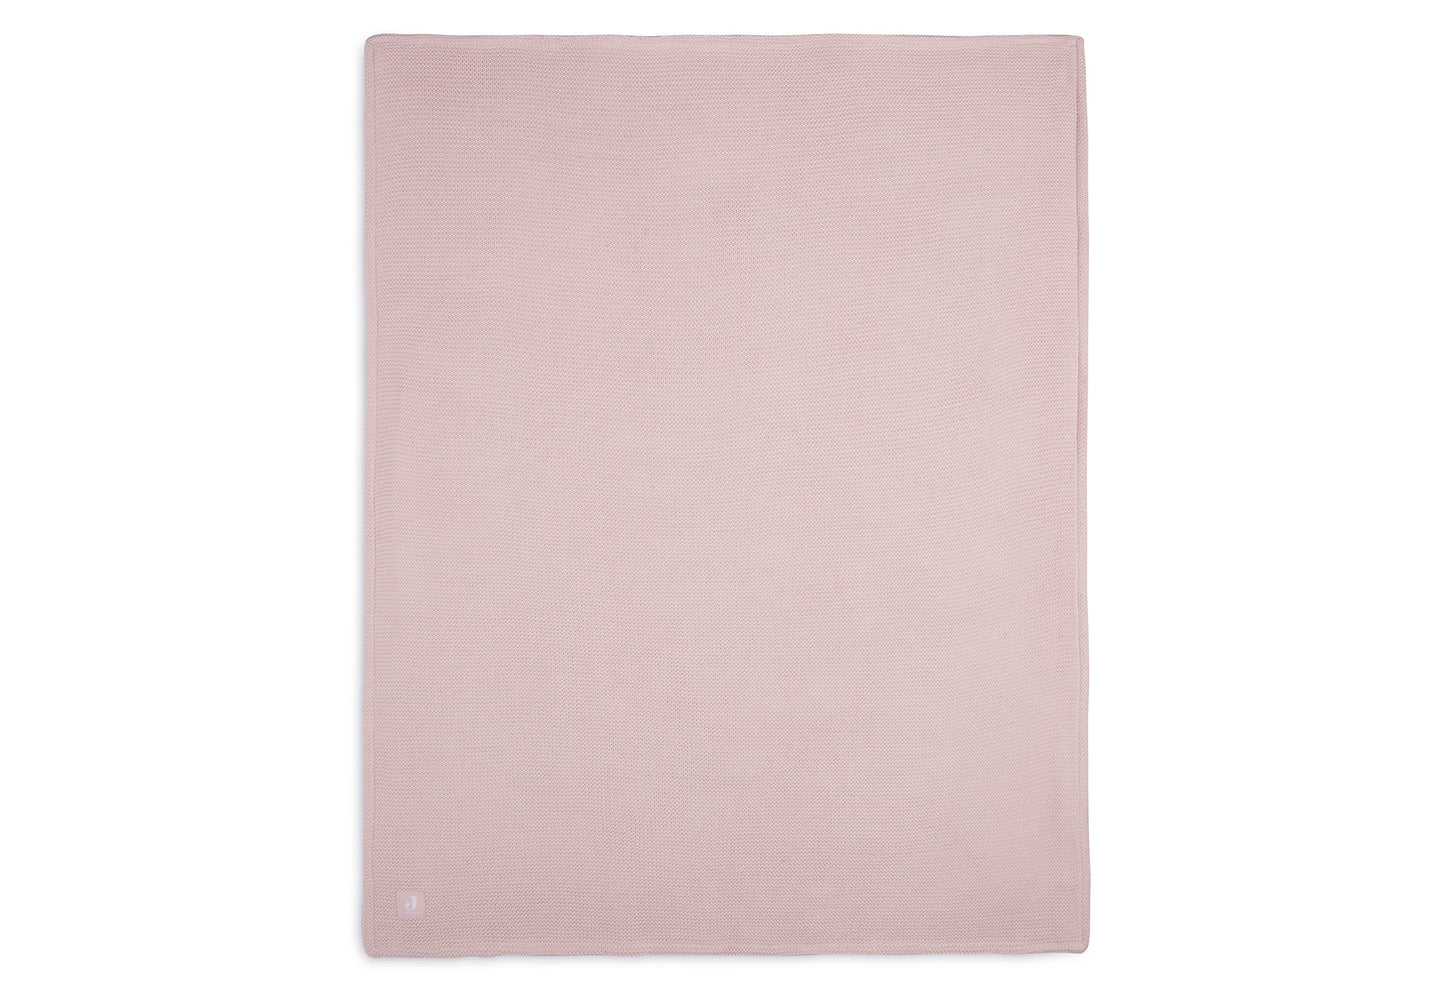 Jollein Babydecke Kinderbett Basic Knit 100x150cm - Pale Pink/Coral Fleece